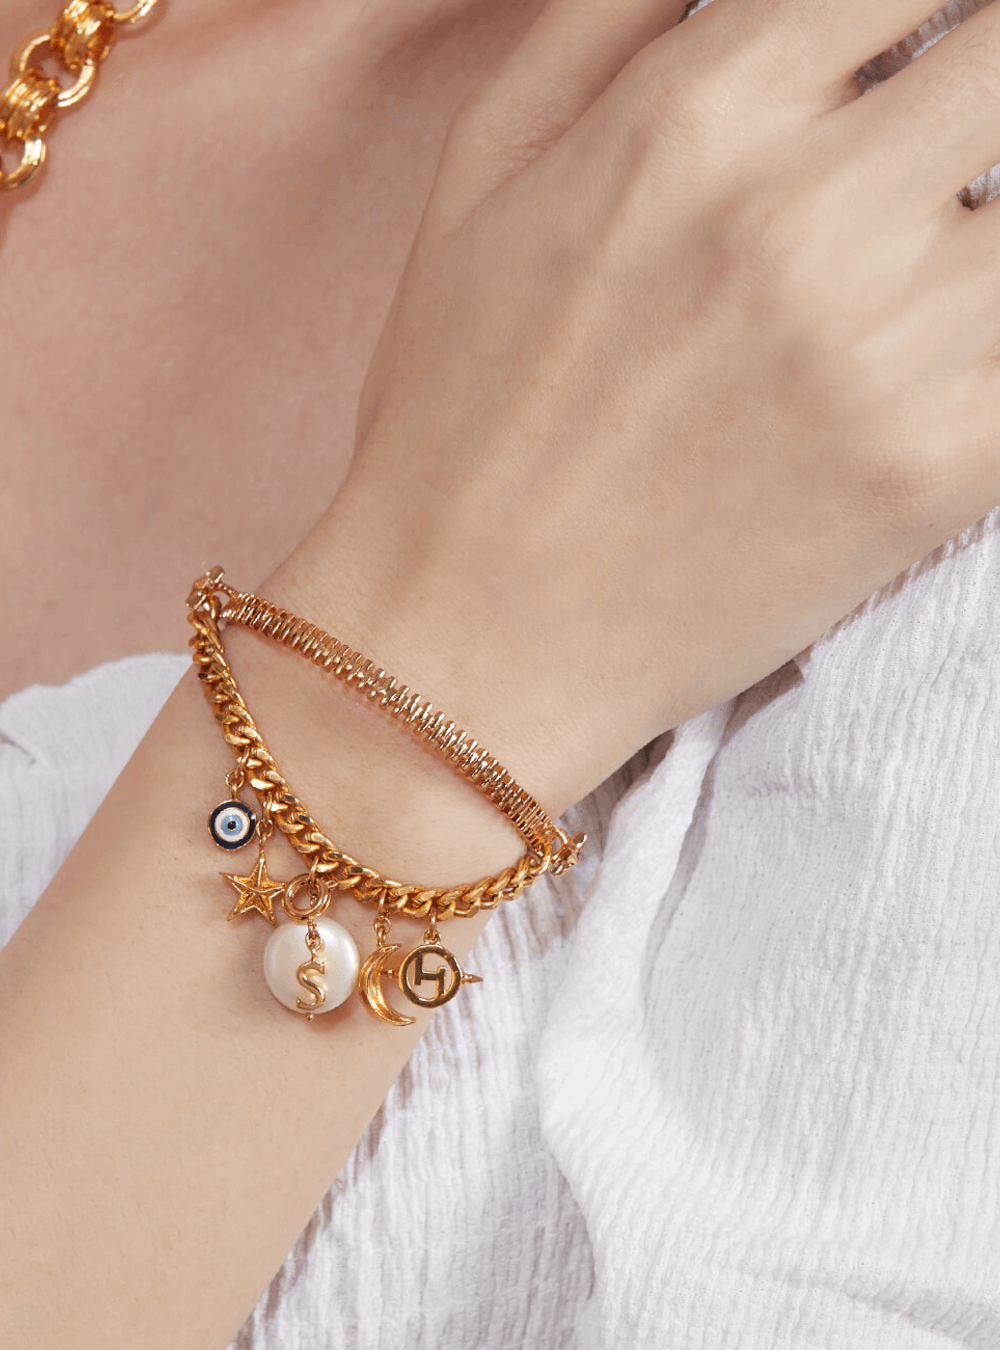 Wallis Simpson's Cross Charm Bracelet - A Legendary Piece Of Jewelry -  Charms Guide